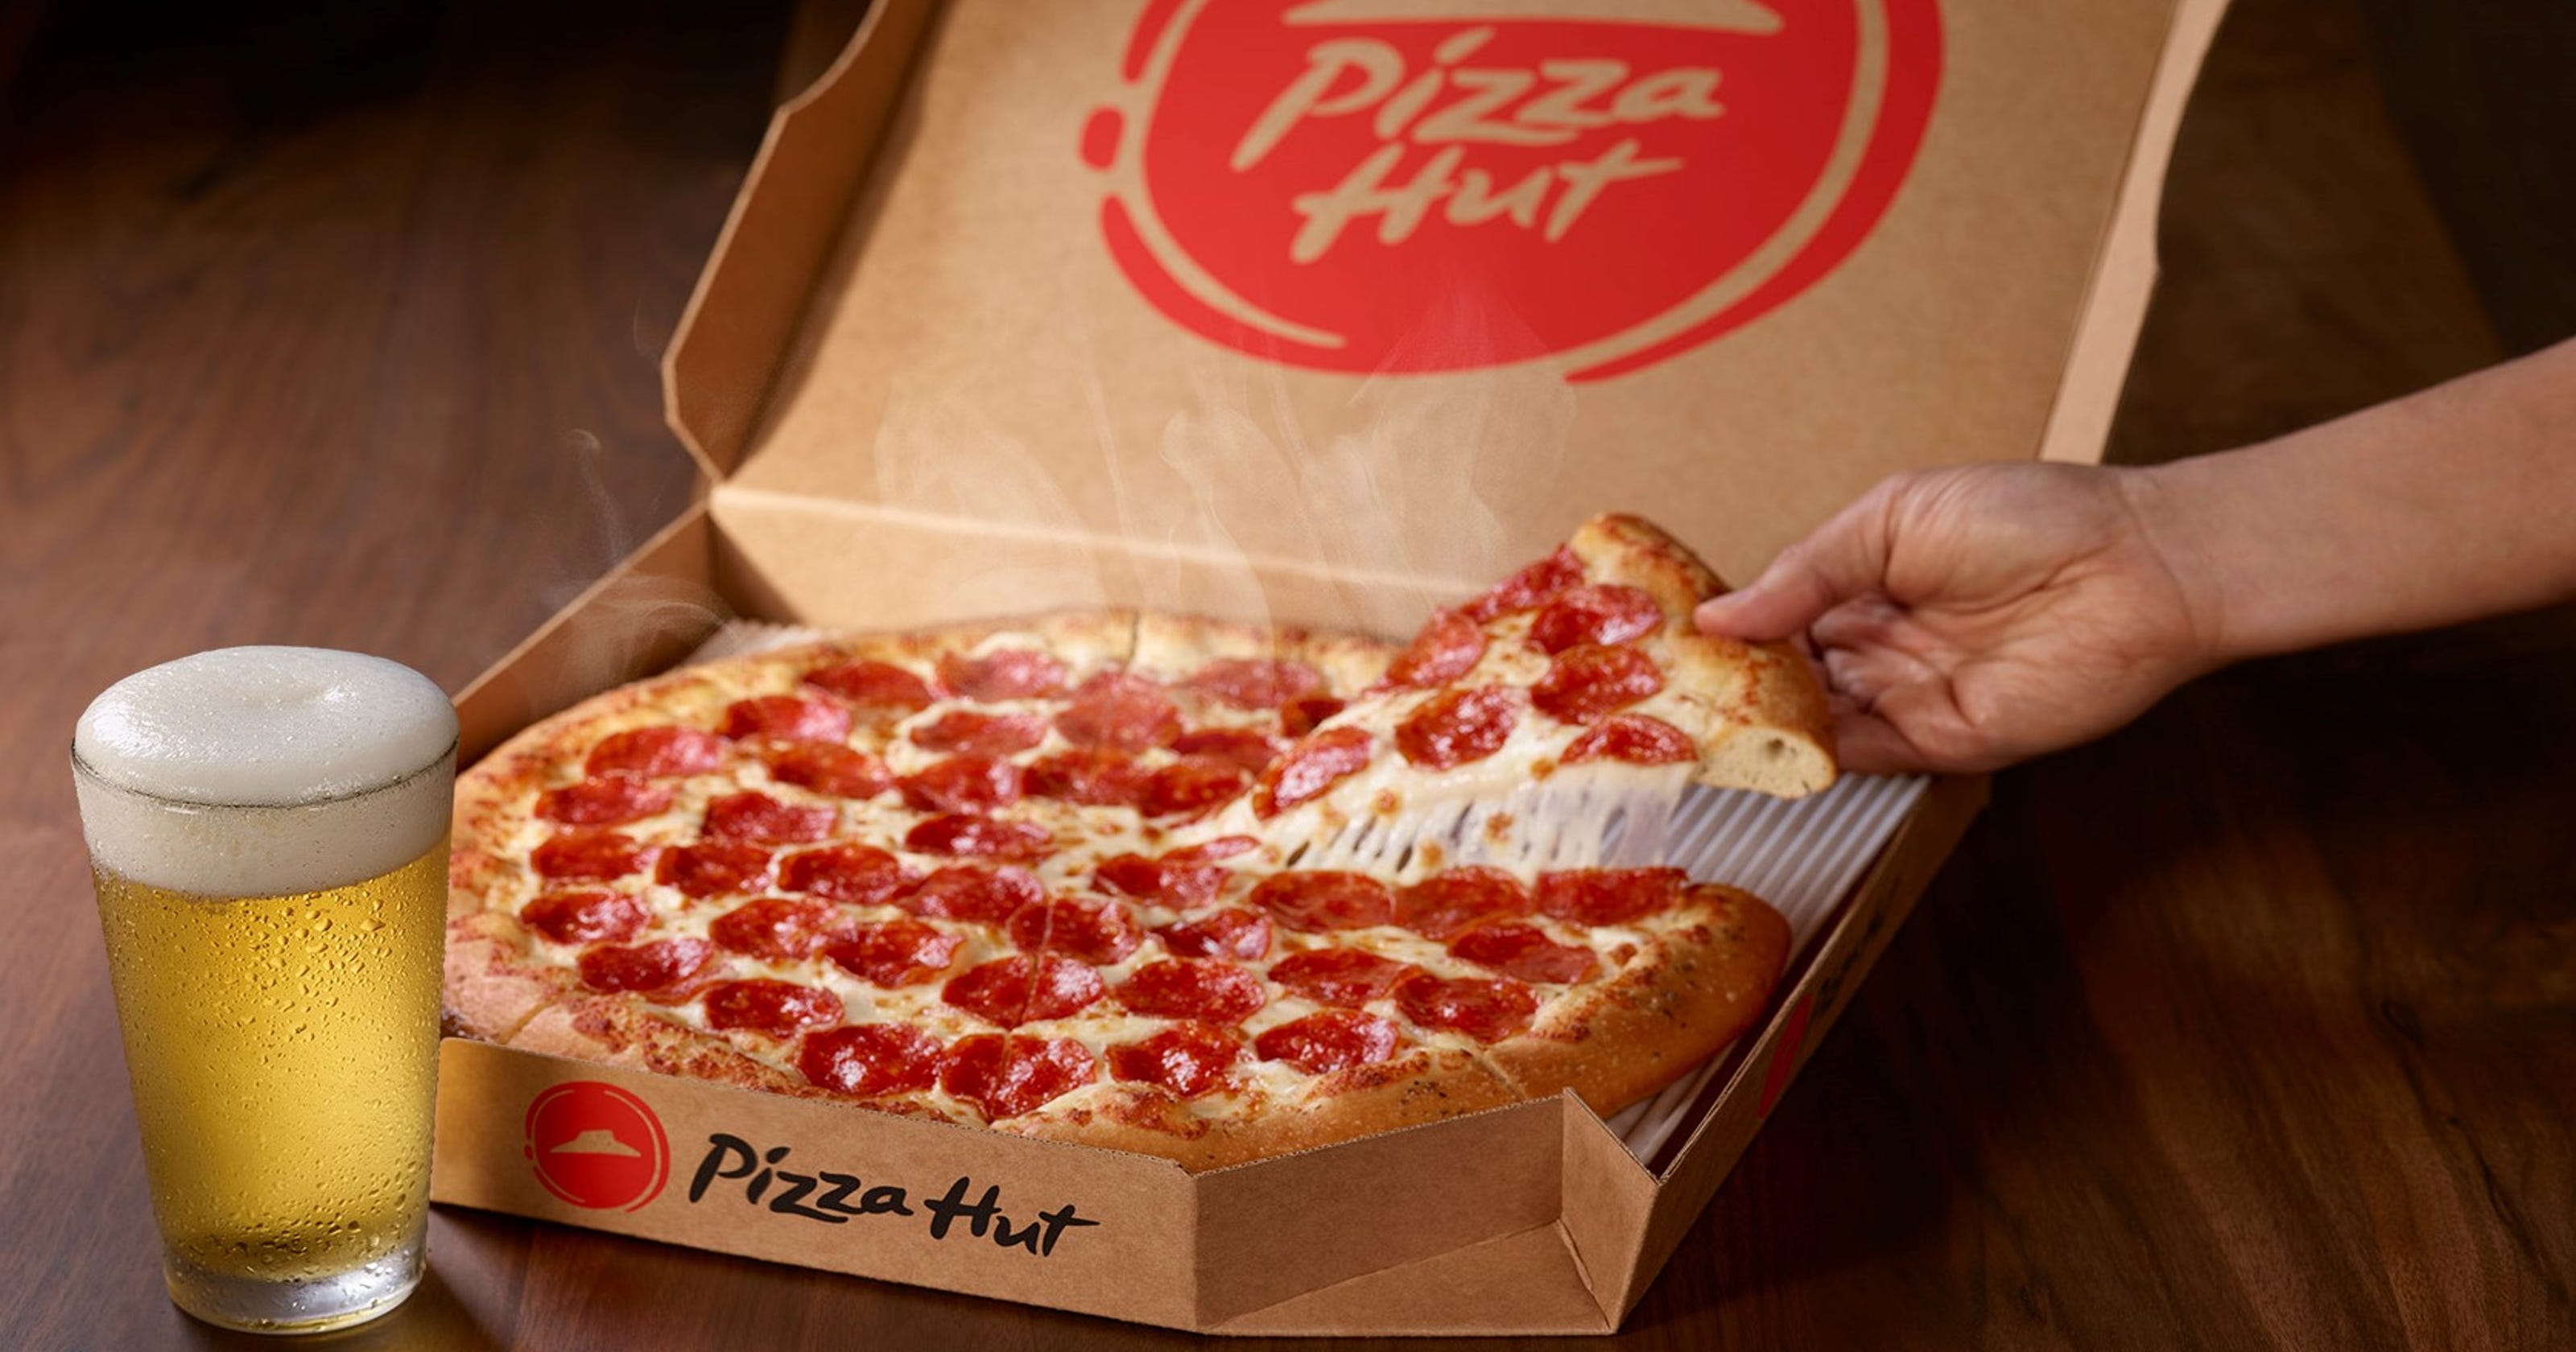 Pizza Hut Hut gets into Super Bowl spirit as new NFL sponsor